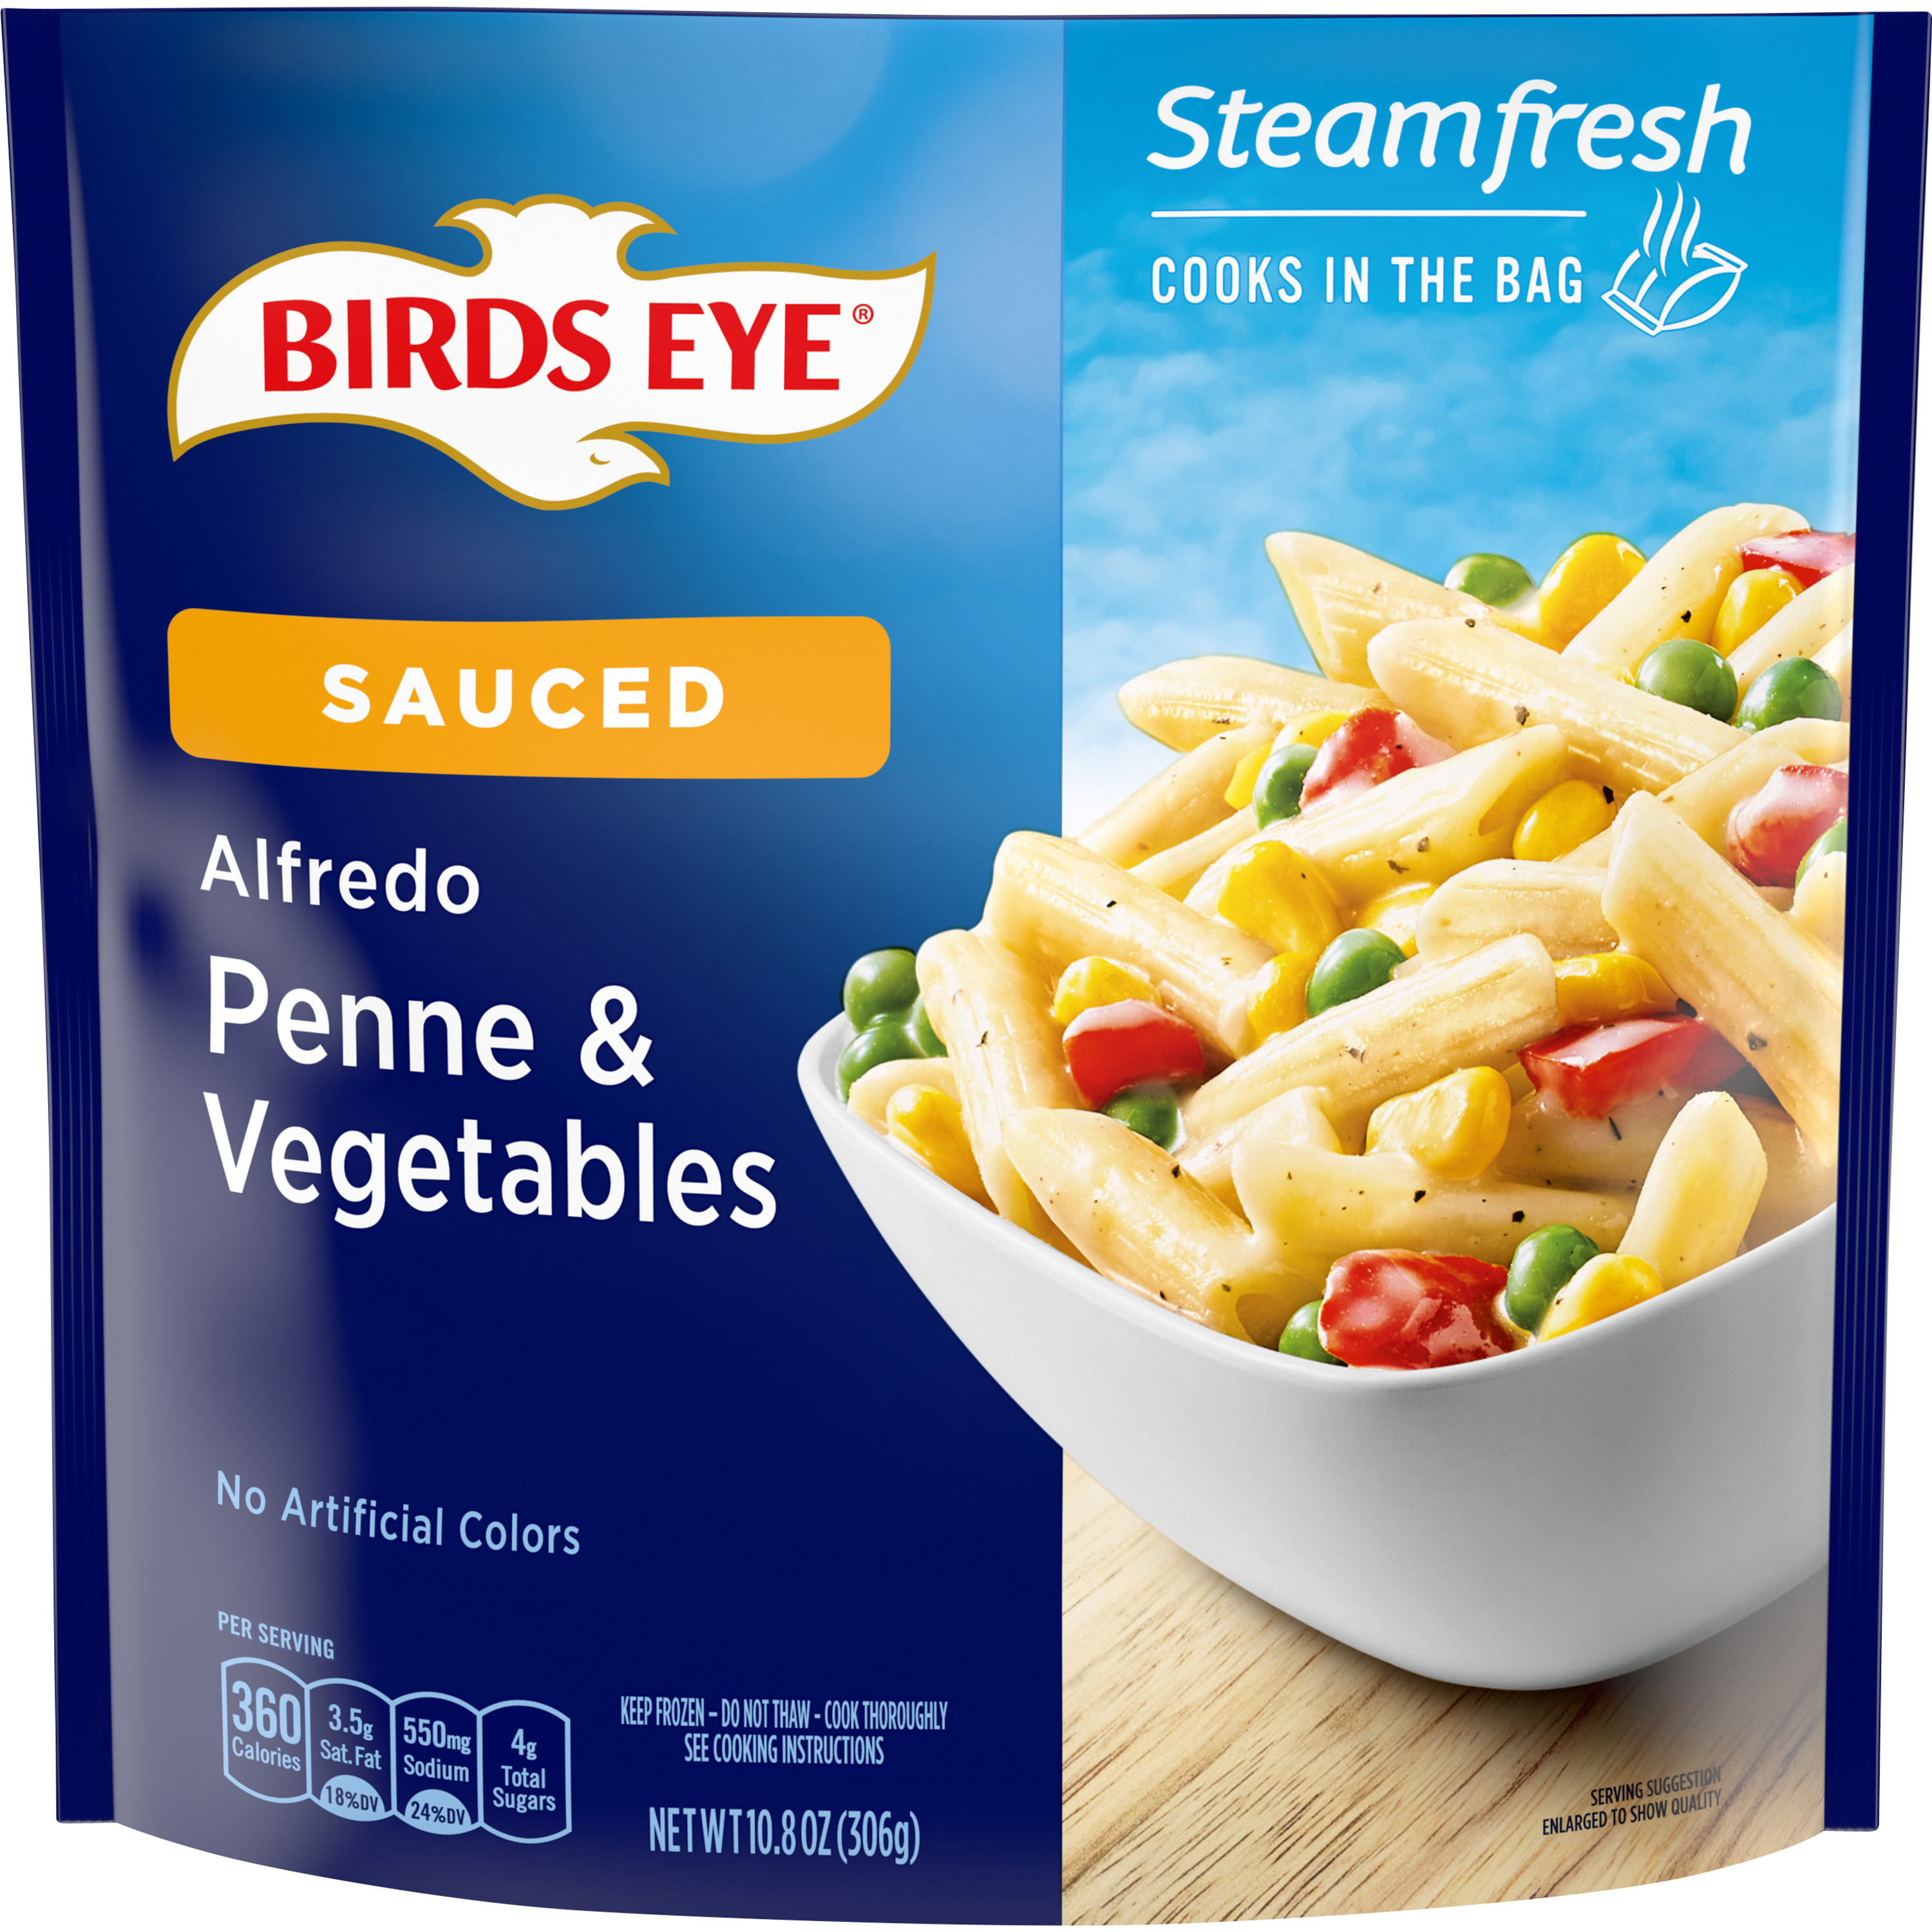 Birds Eye Steamfresh Chef’s Favorites Sauced Penne & Vegetables & Alfredo Sauce